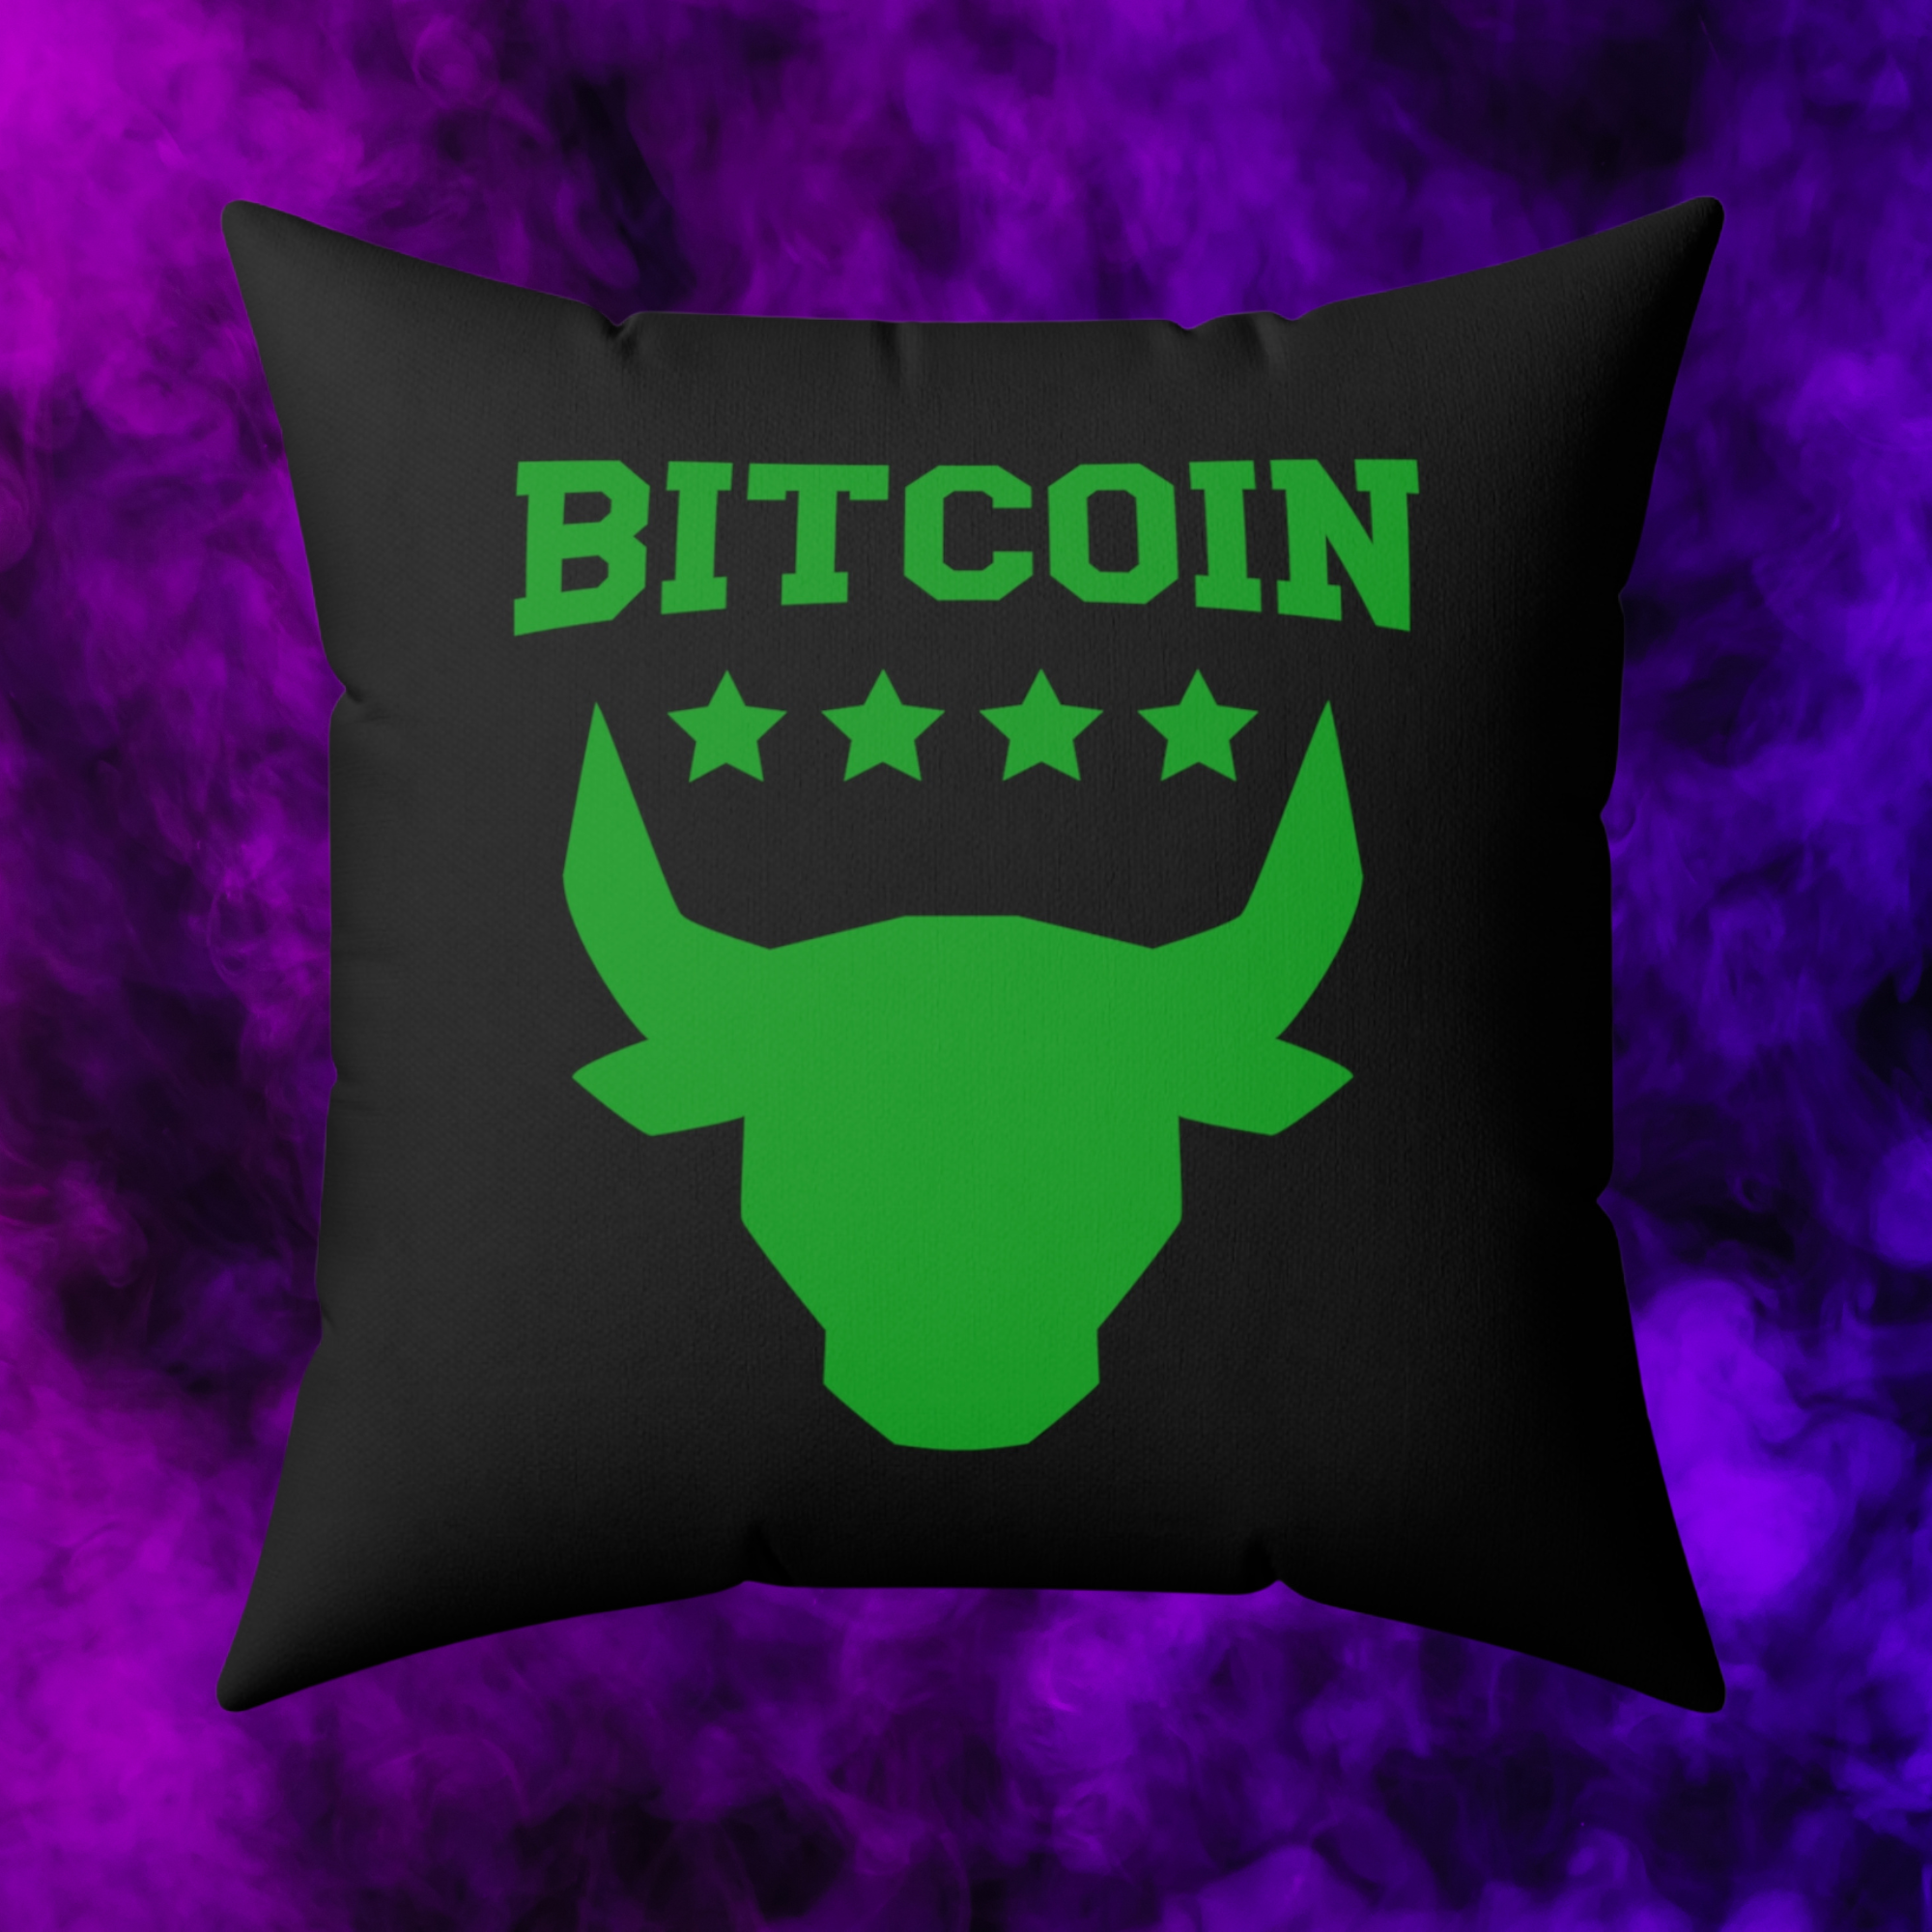 Bitcoin Home Decor - Bitcoin Bull Pillow available from NEONCRYPTO STORE.